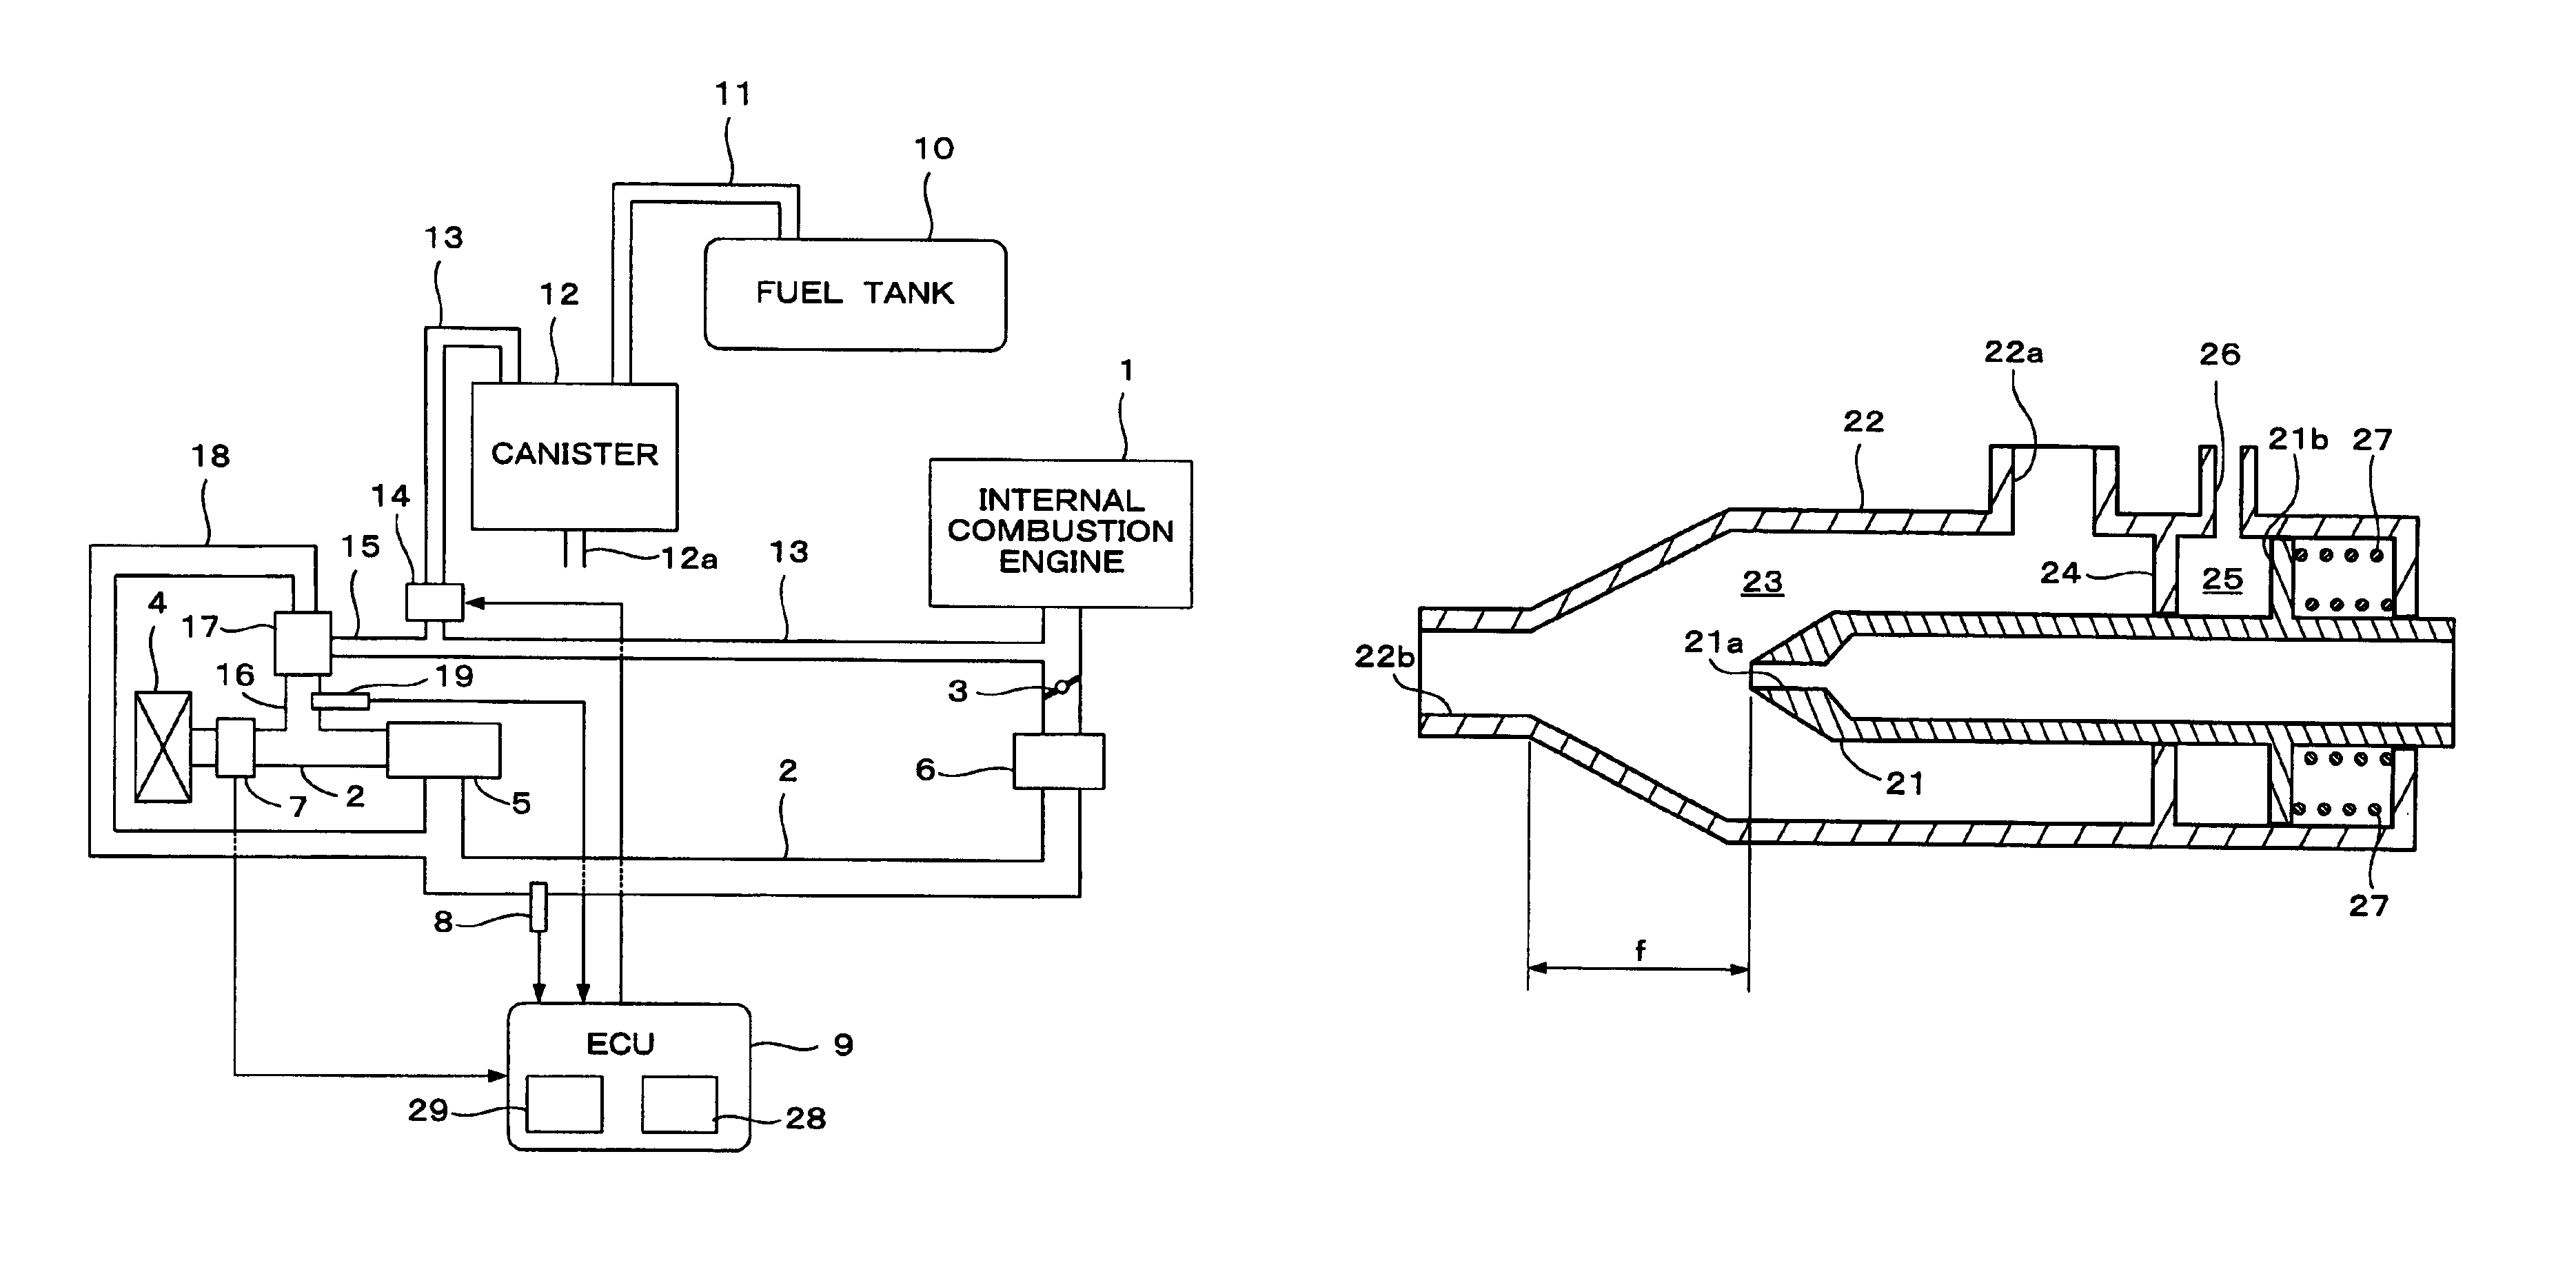 Evaporative fuel processing system